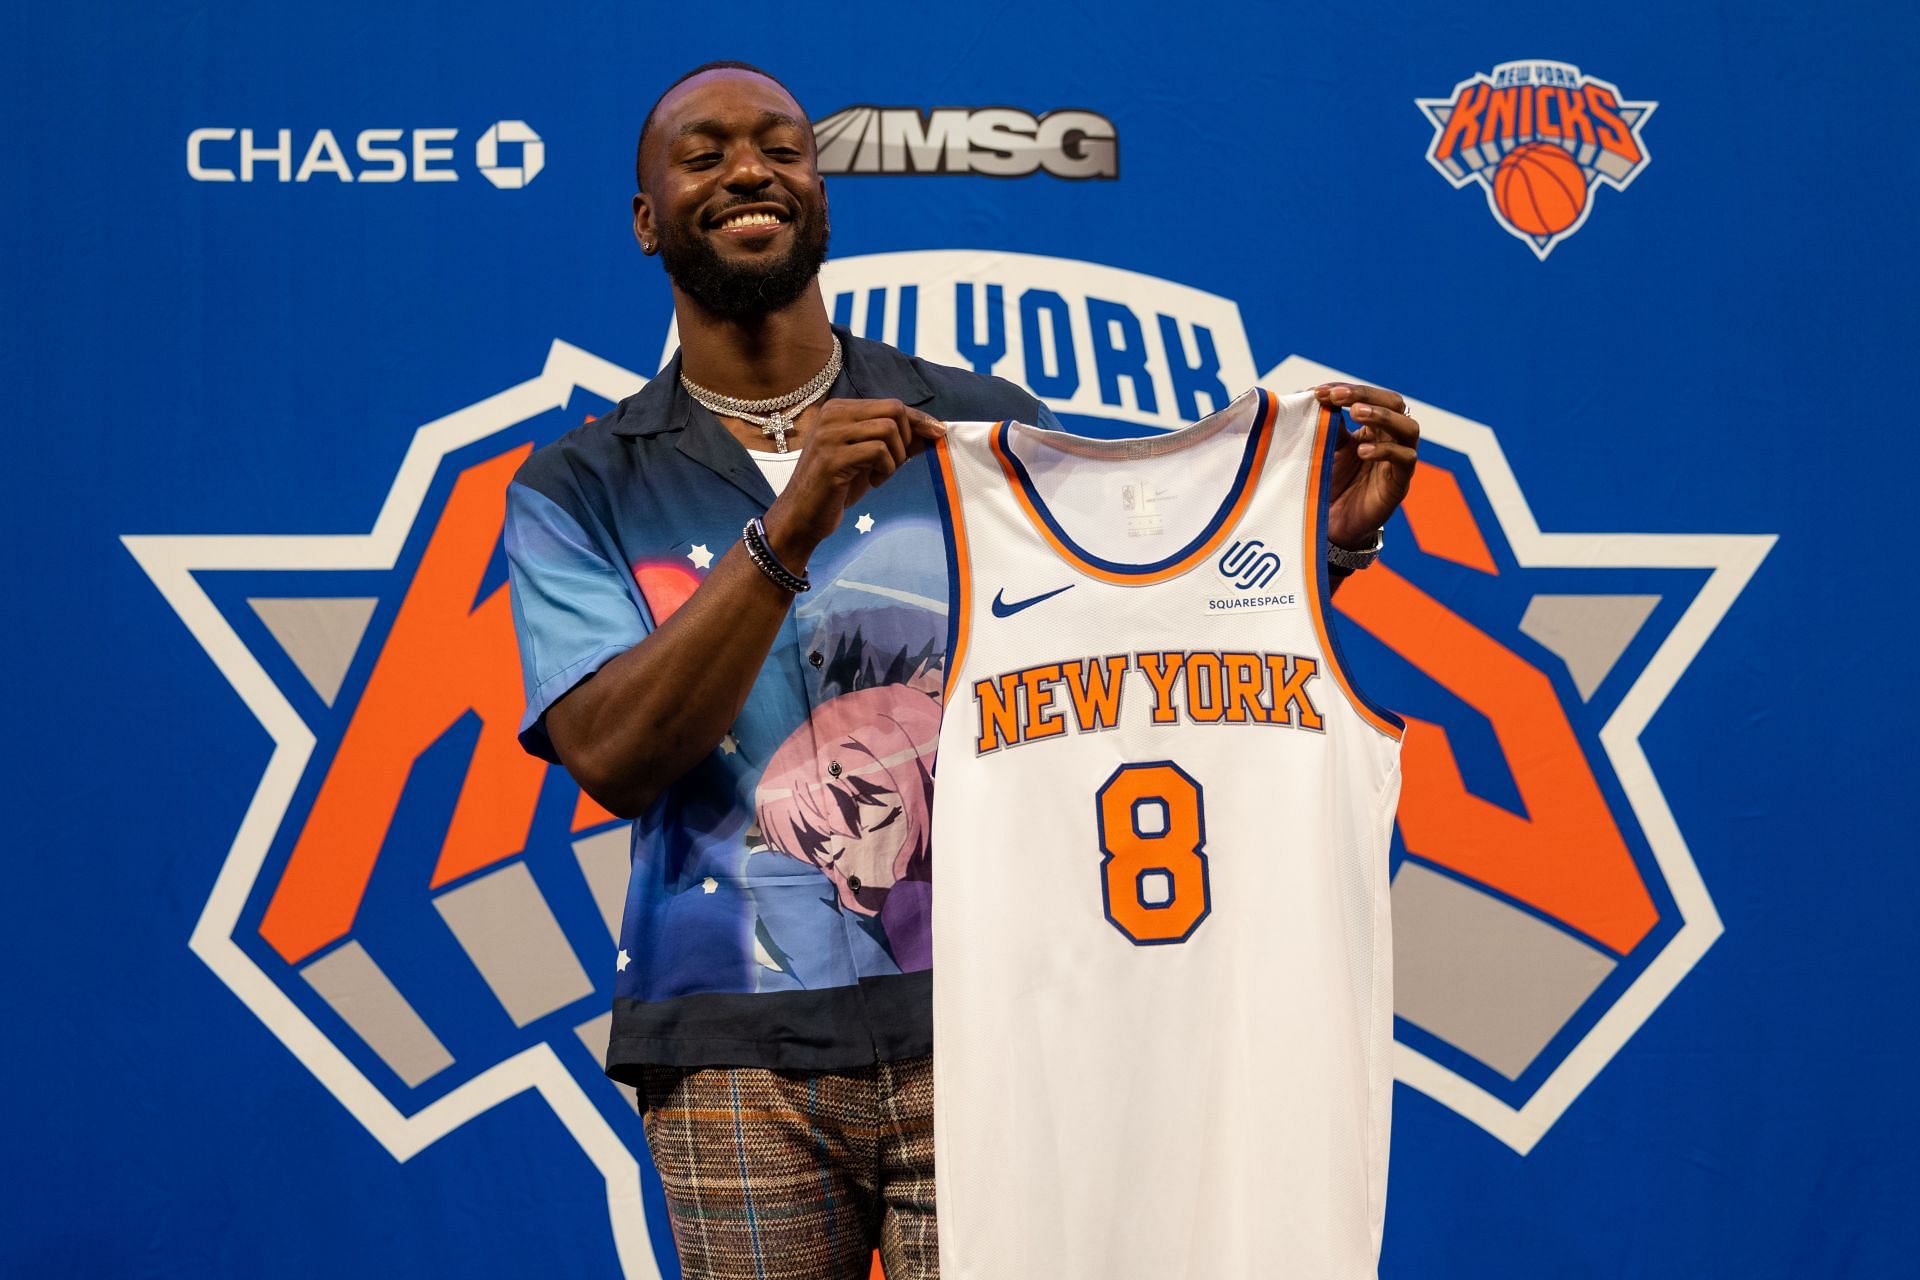 Kemba Walker (#8) of the New York Knicks